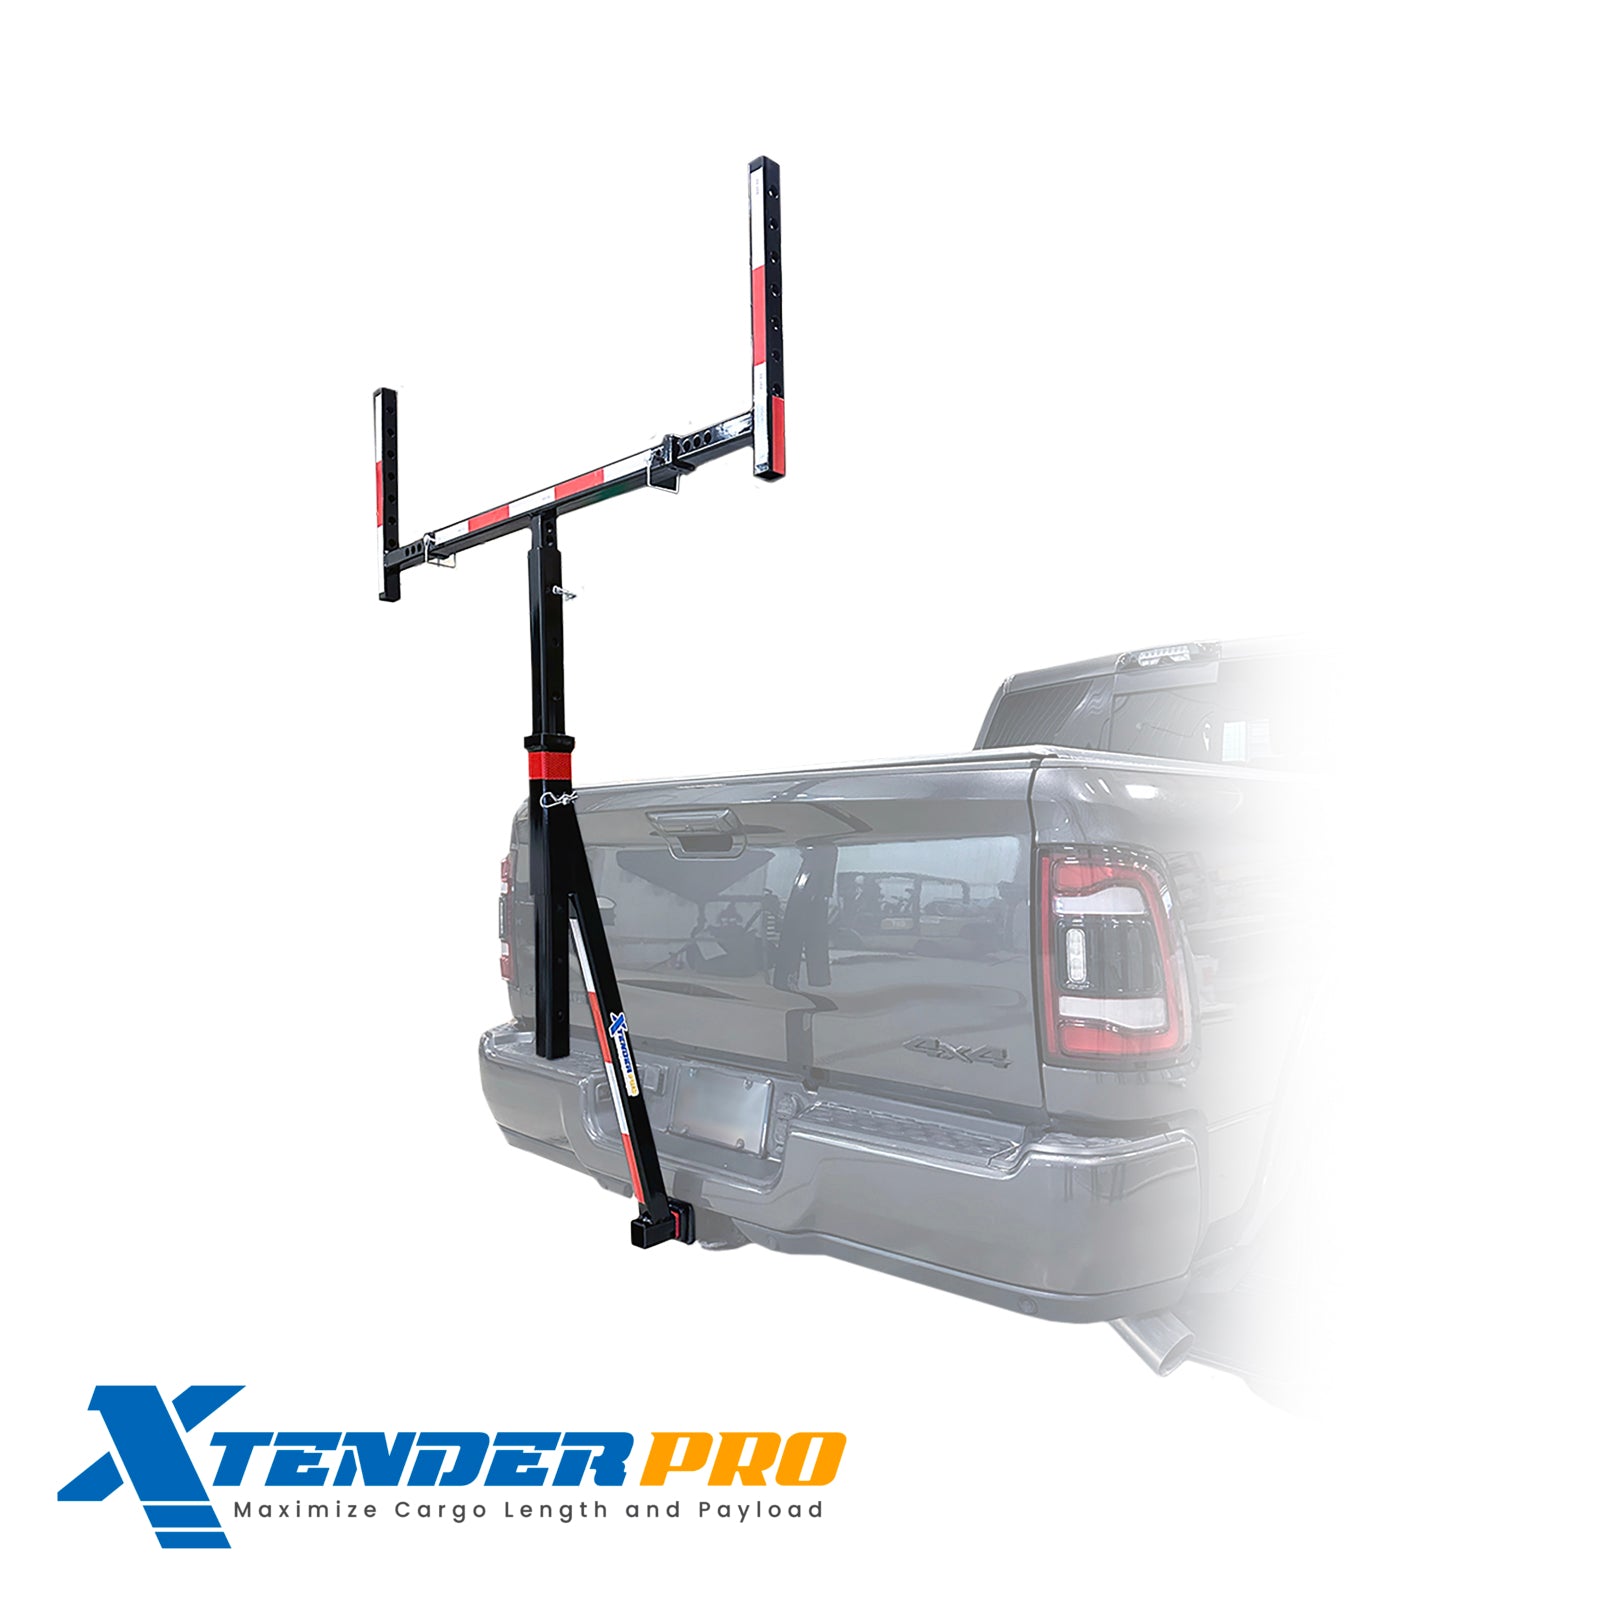 Xtender Pro™ Truck Bed Extender 750 lbs - paragonpromfg